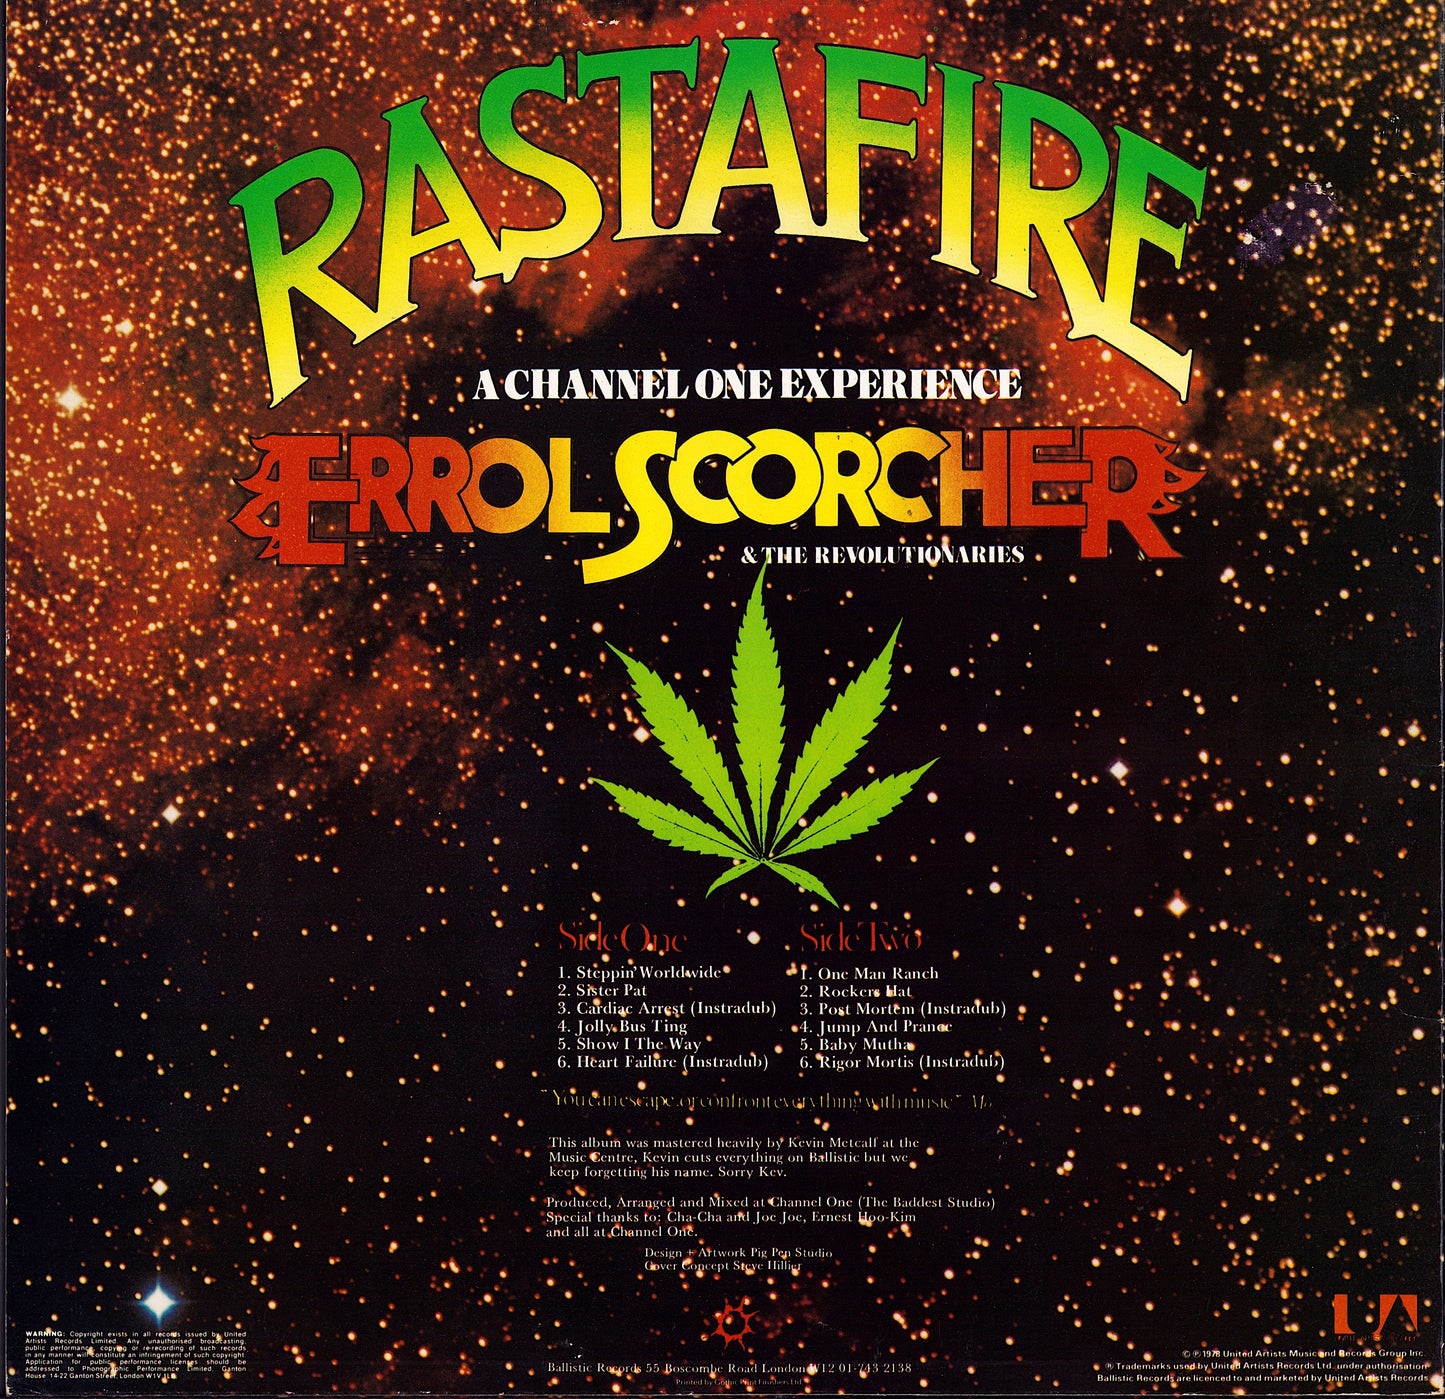 Errol Scorcher And The Revolutionaries ‎- Rasta Fire Vinyl LP